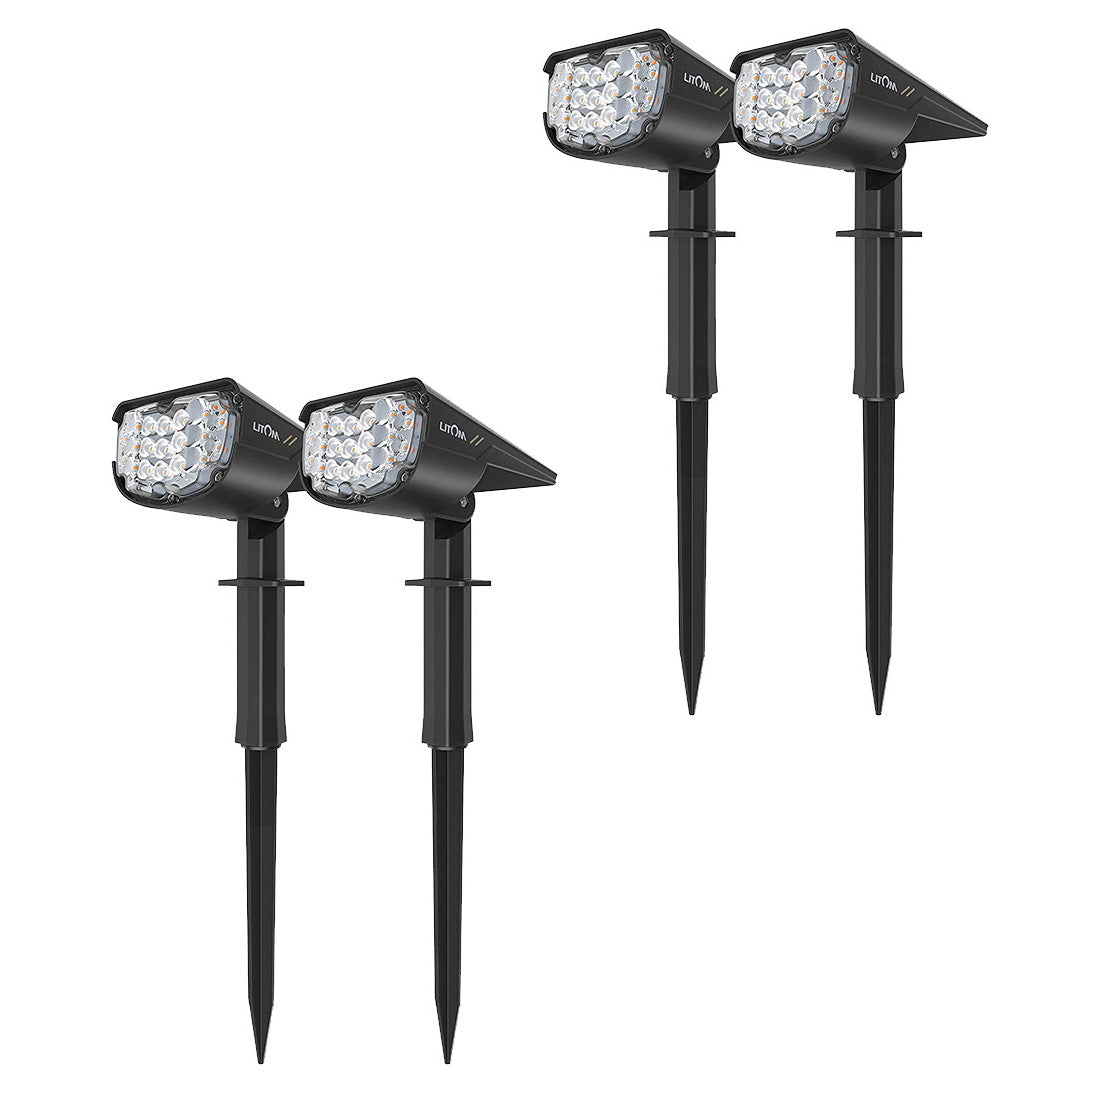 Litom Outdoor Solar Spotlights with USB Charging, 4 Pack